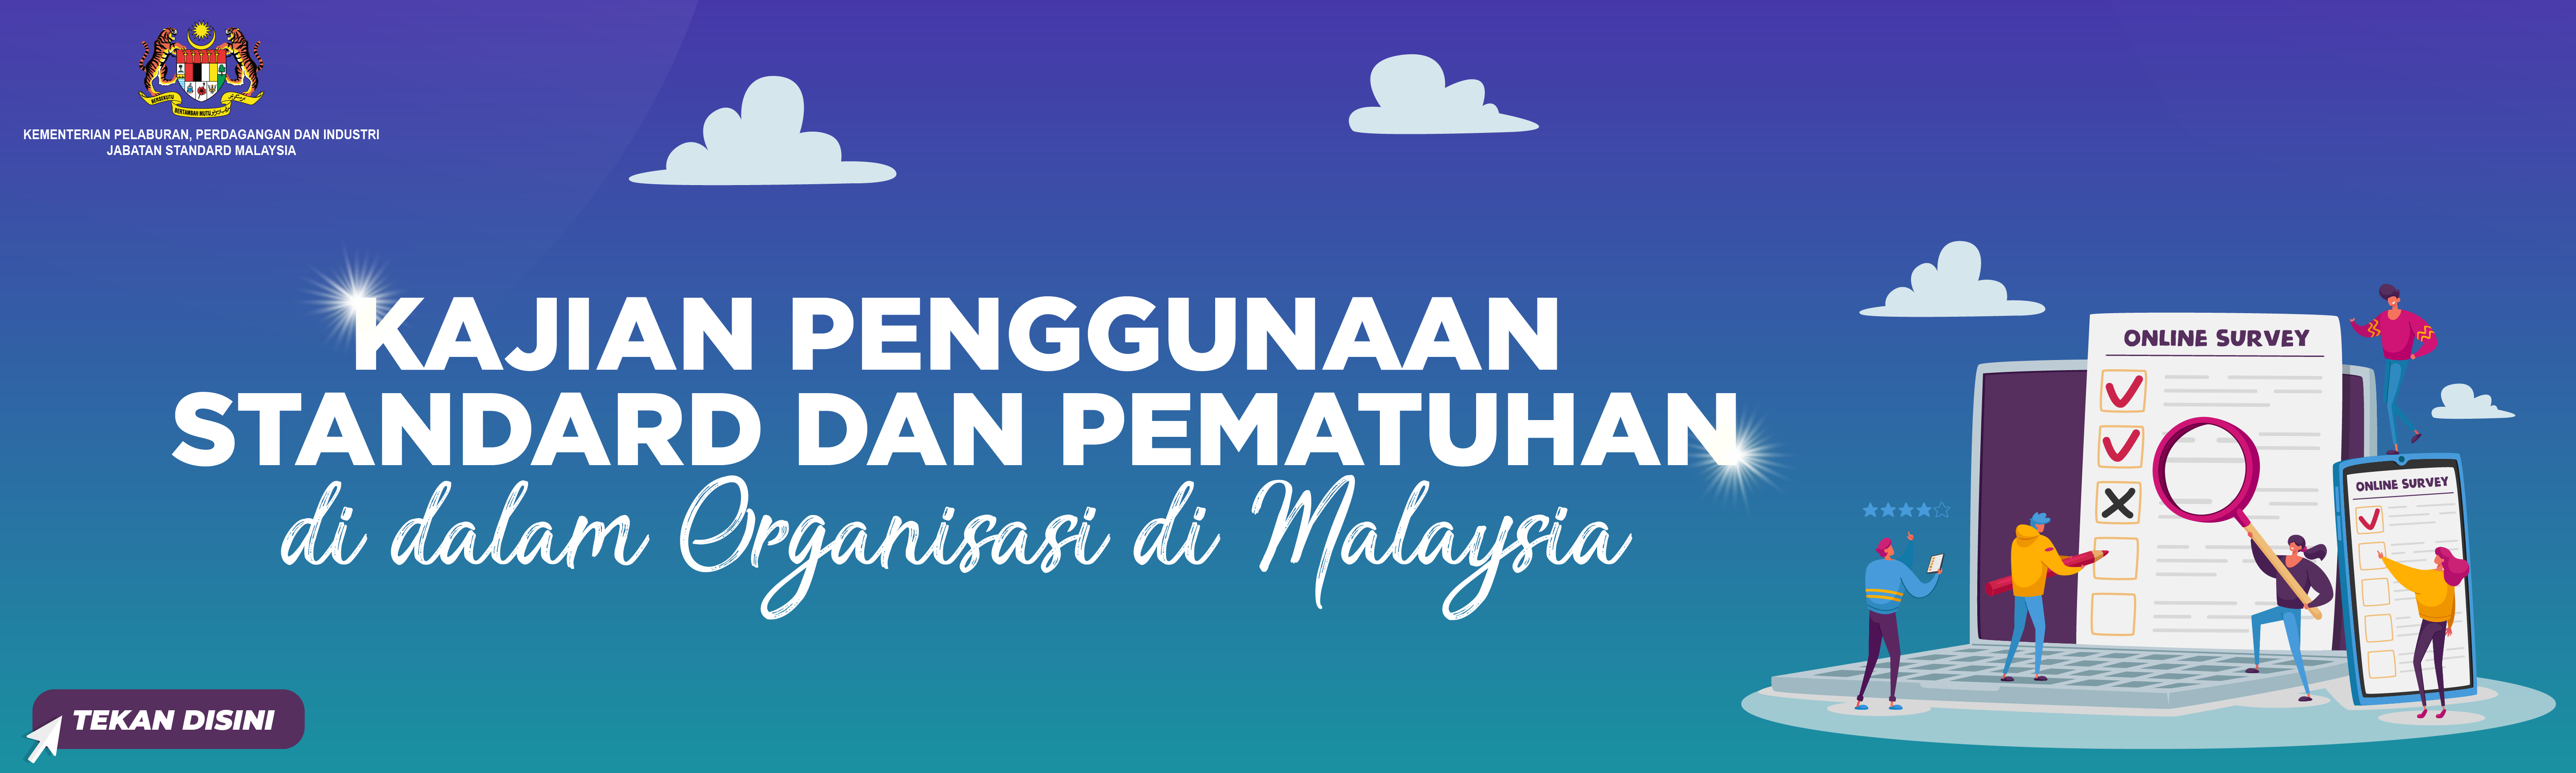 Kajian Penggunaan Standard dan Pematuhan di dalam Organisasi di Malaysia